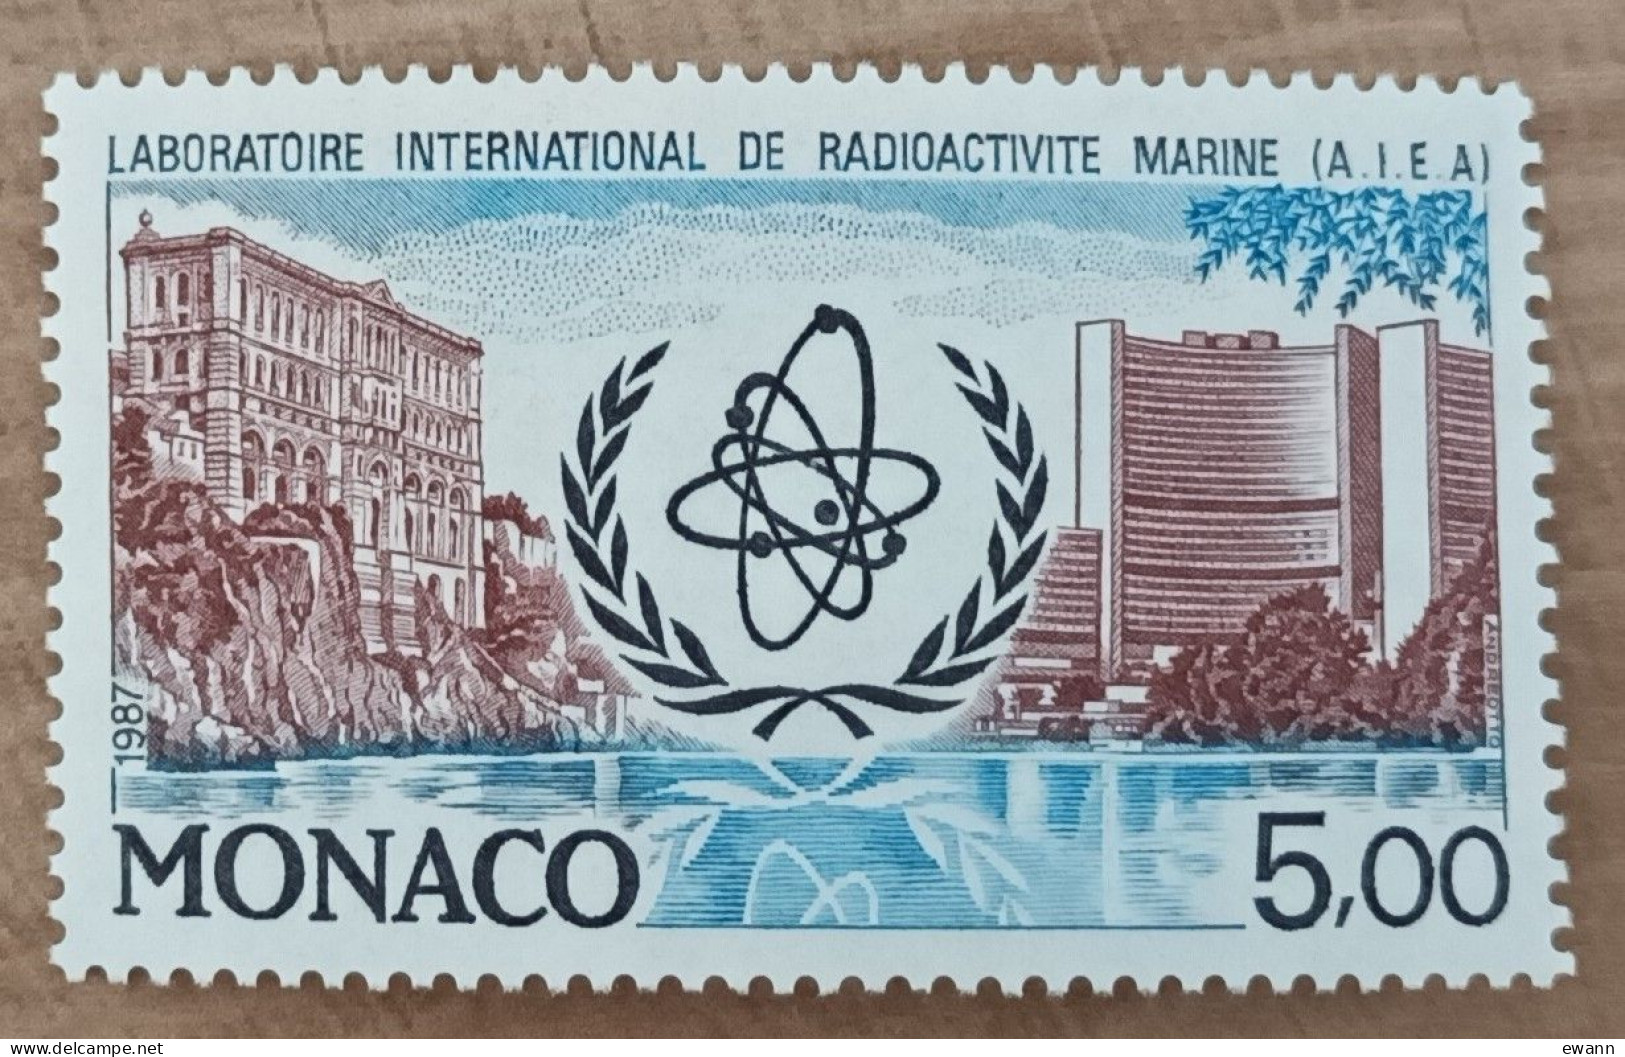 Monaco - YT N°1602 - Laboratoire International De Radioactivité Marine - 1987 - Neuf - Neufs